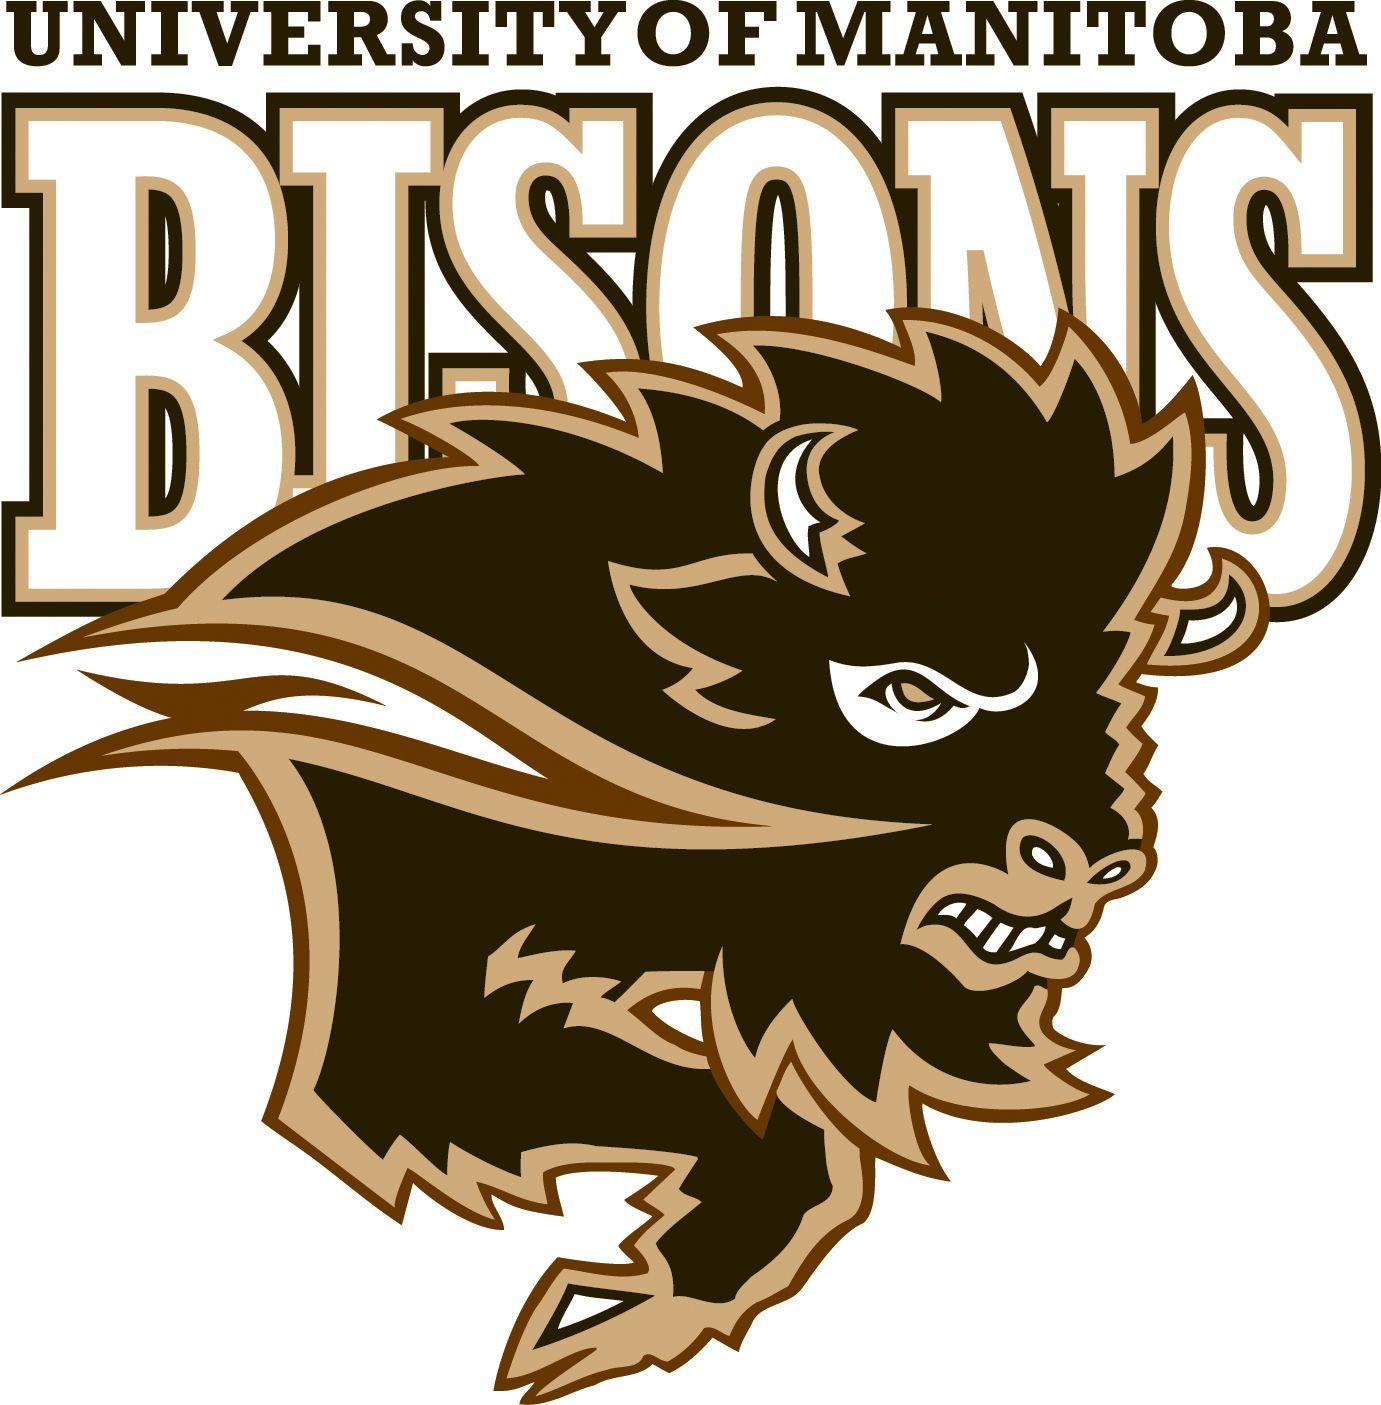 Bison Football Logo - University of Manitoba - Fort Garry BookStore - Bisons Logo Downloads